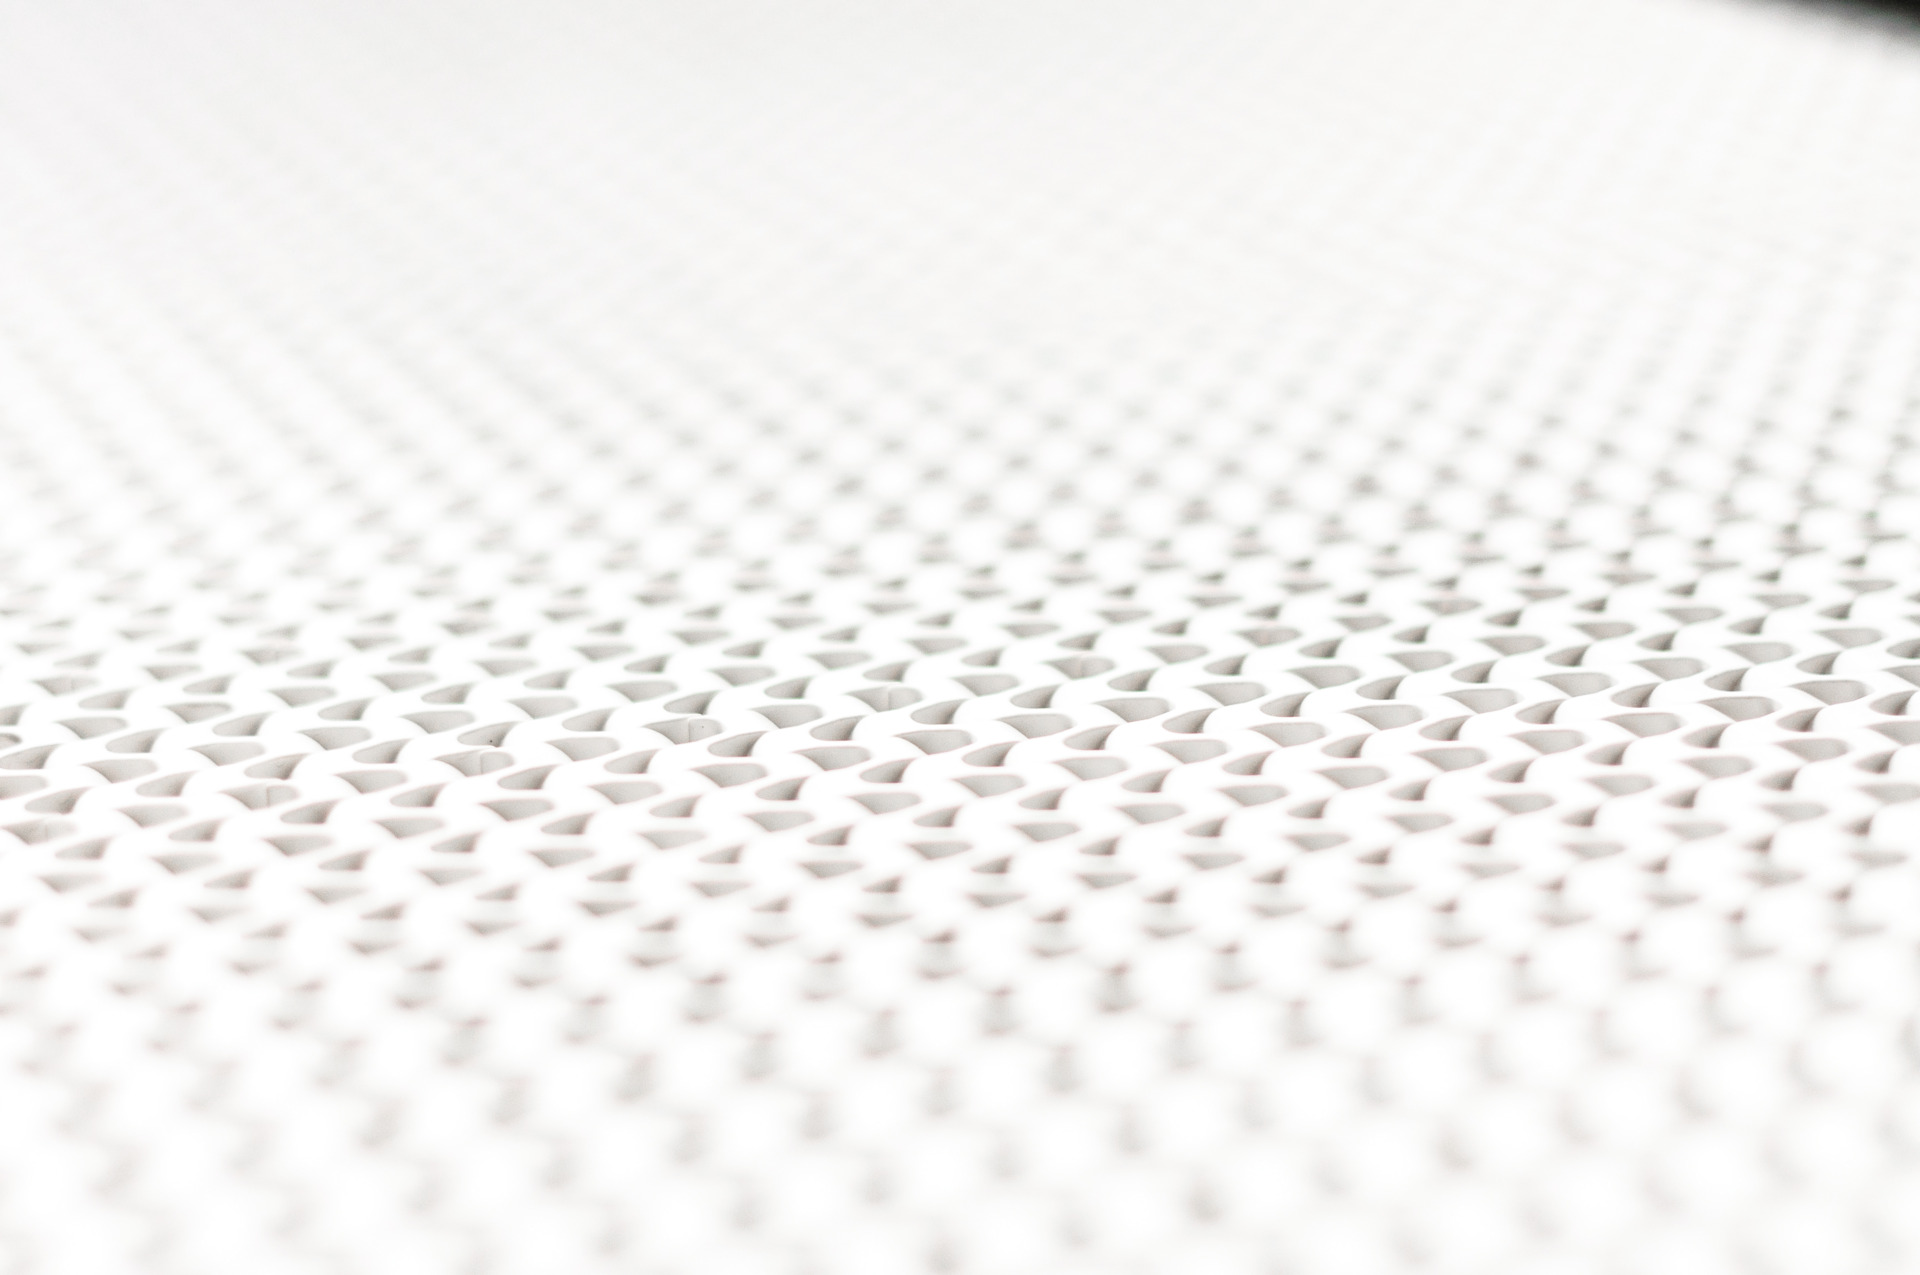 Transparent plastic grid pattern clear white texture background